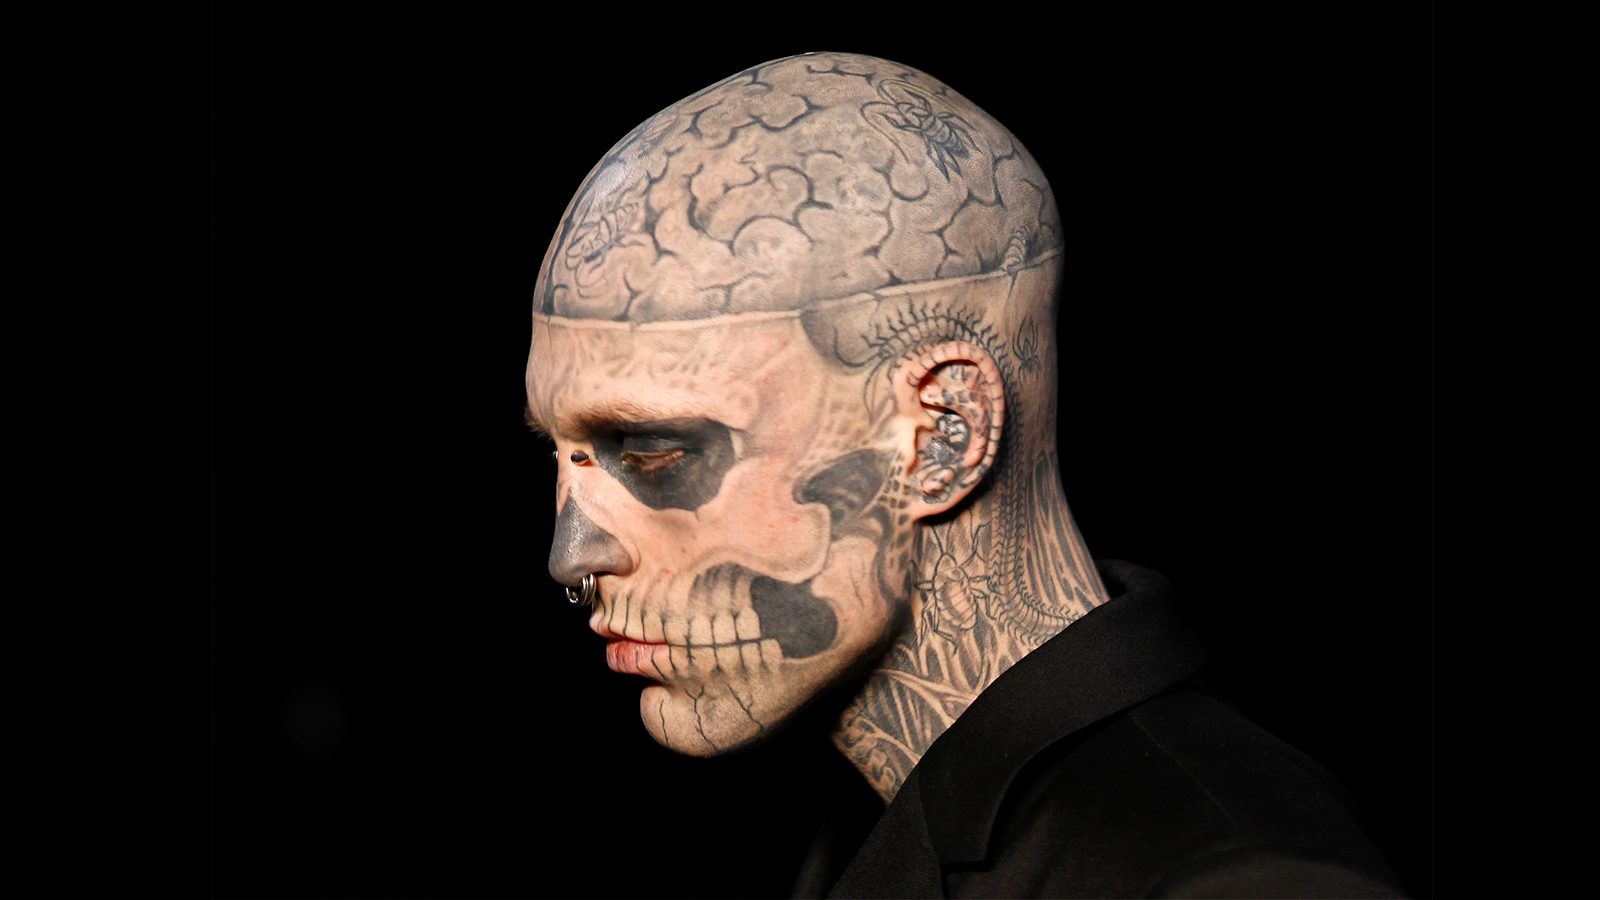 Zombie Boy Fashion Model Rick Genest Dead at 32